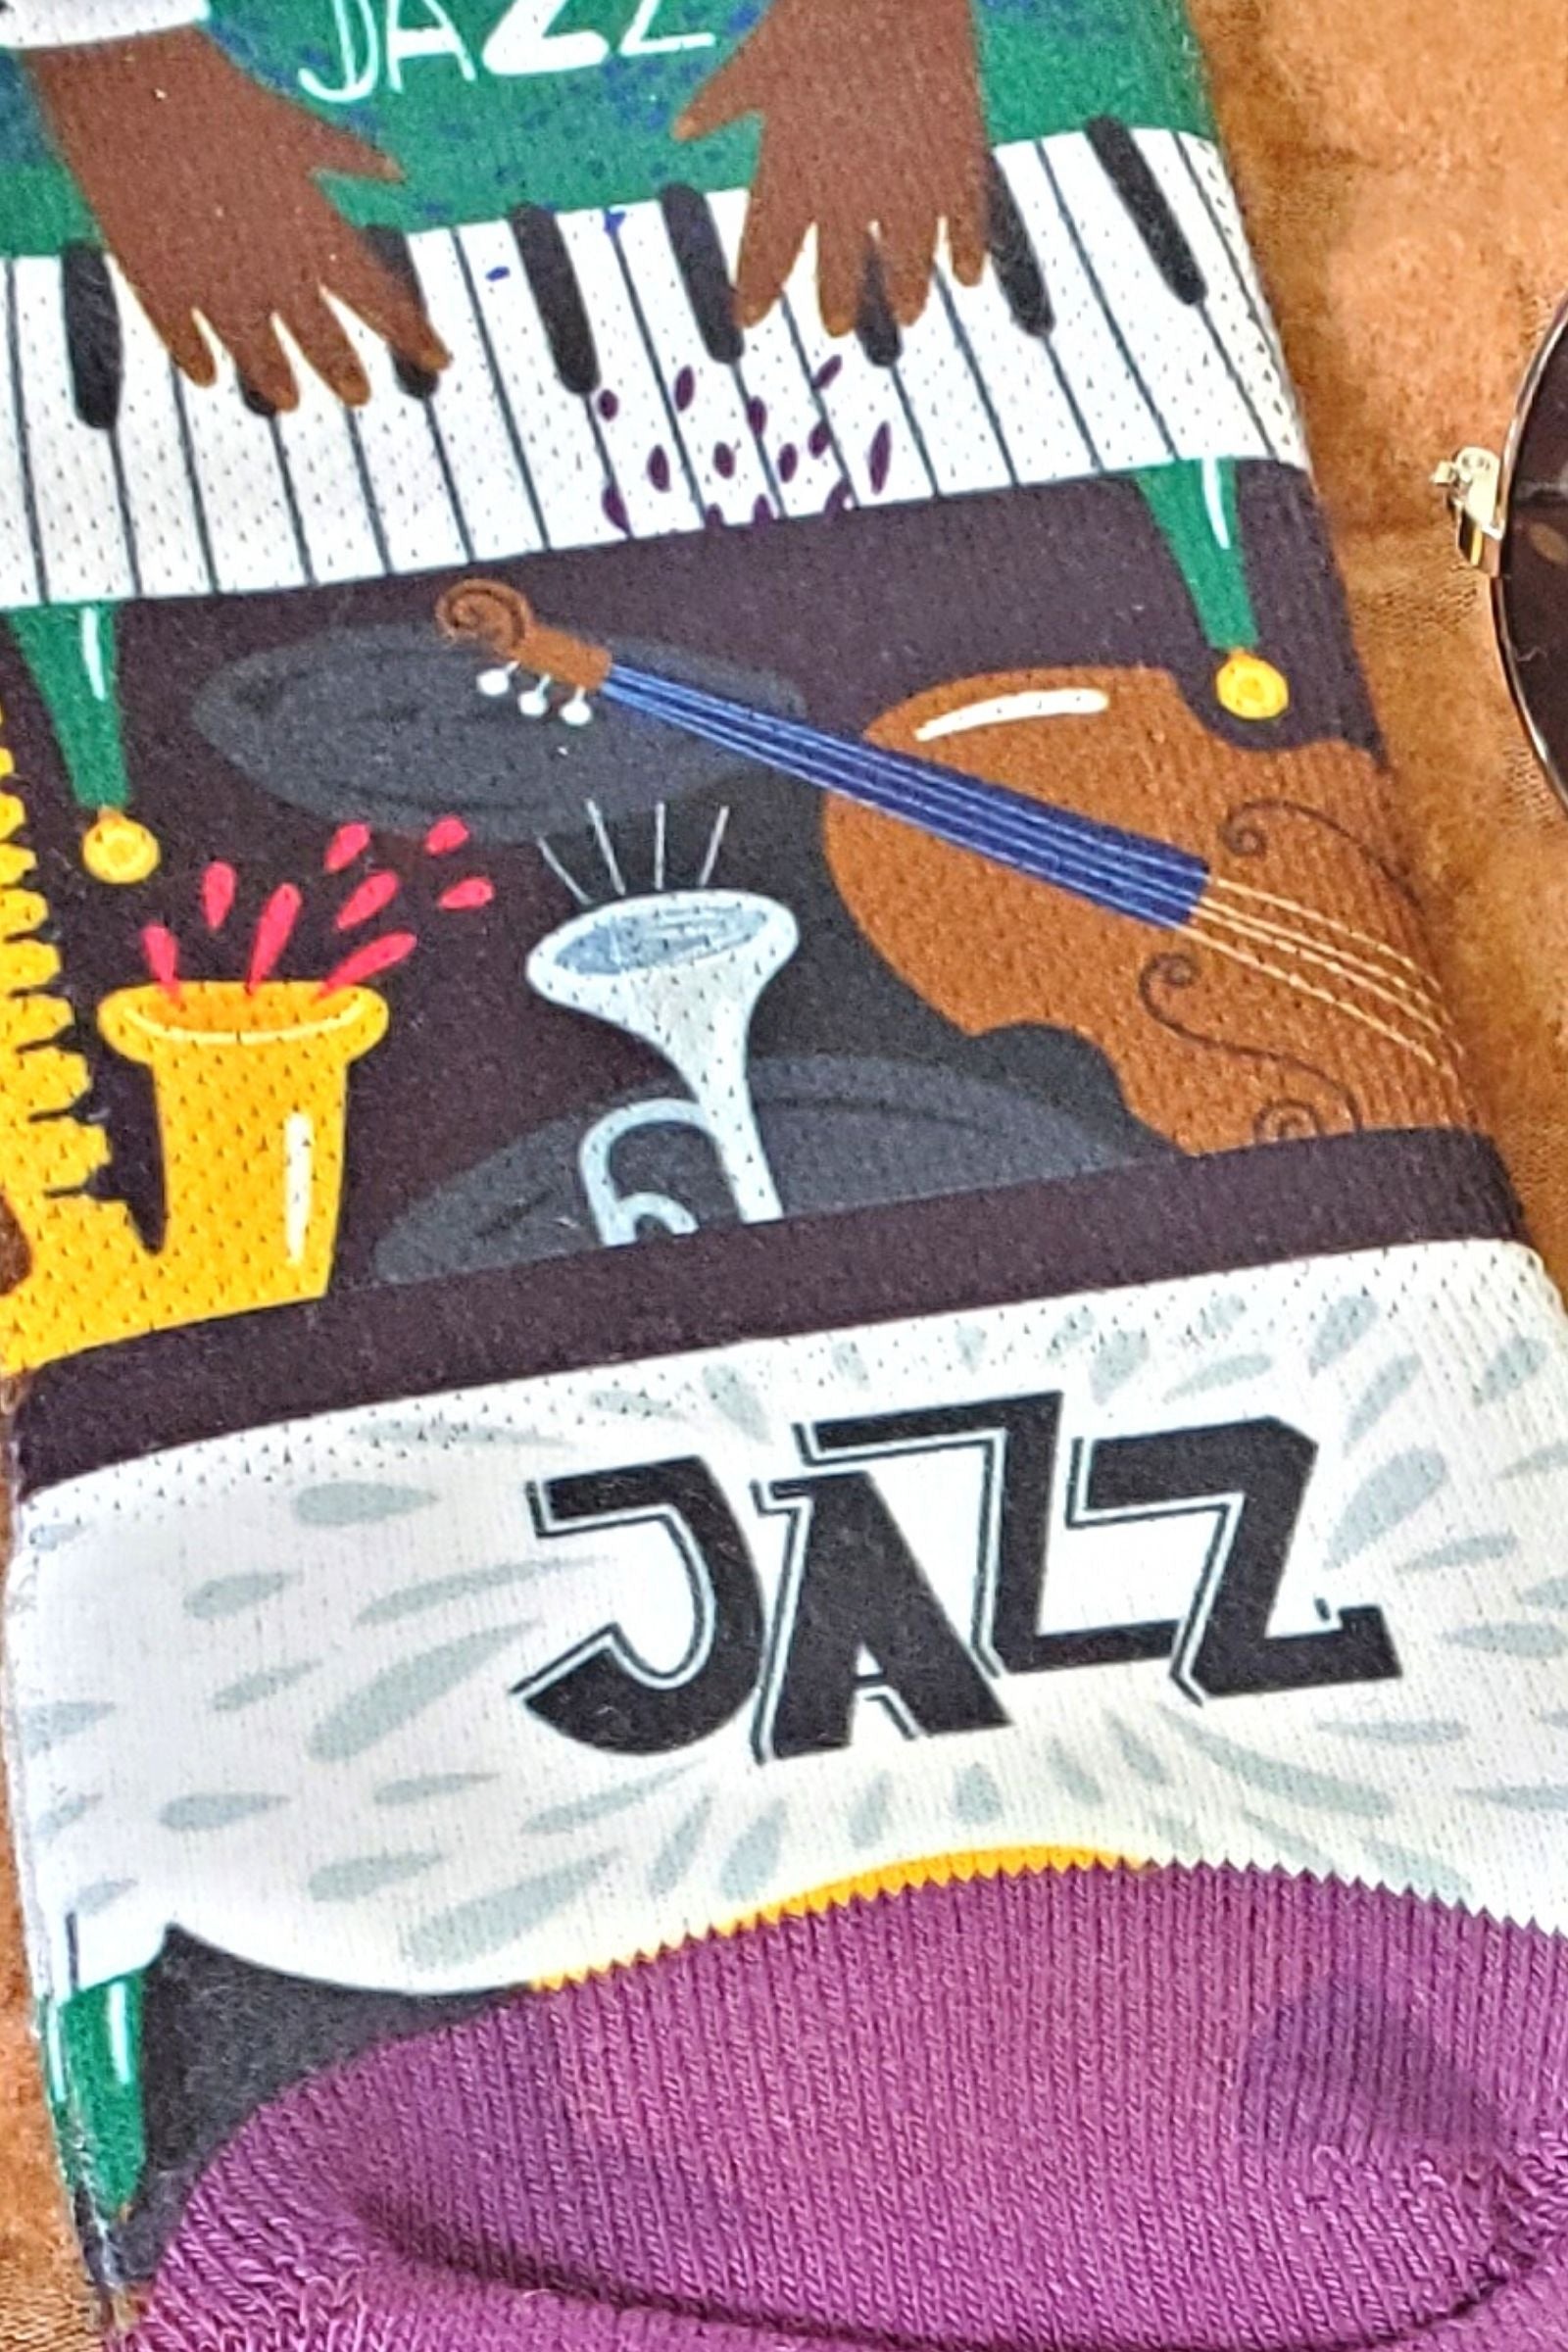 Jazz Club Men's Crew Socks